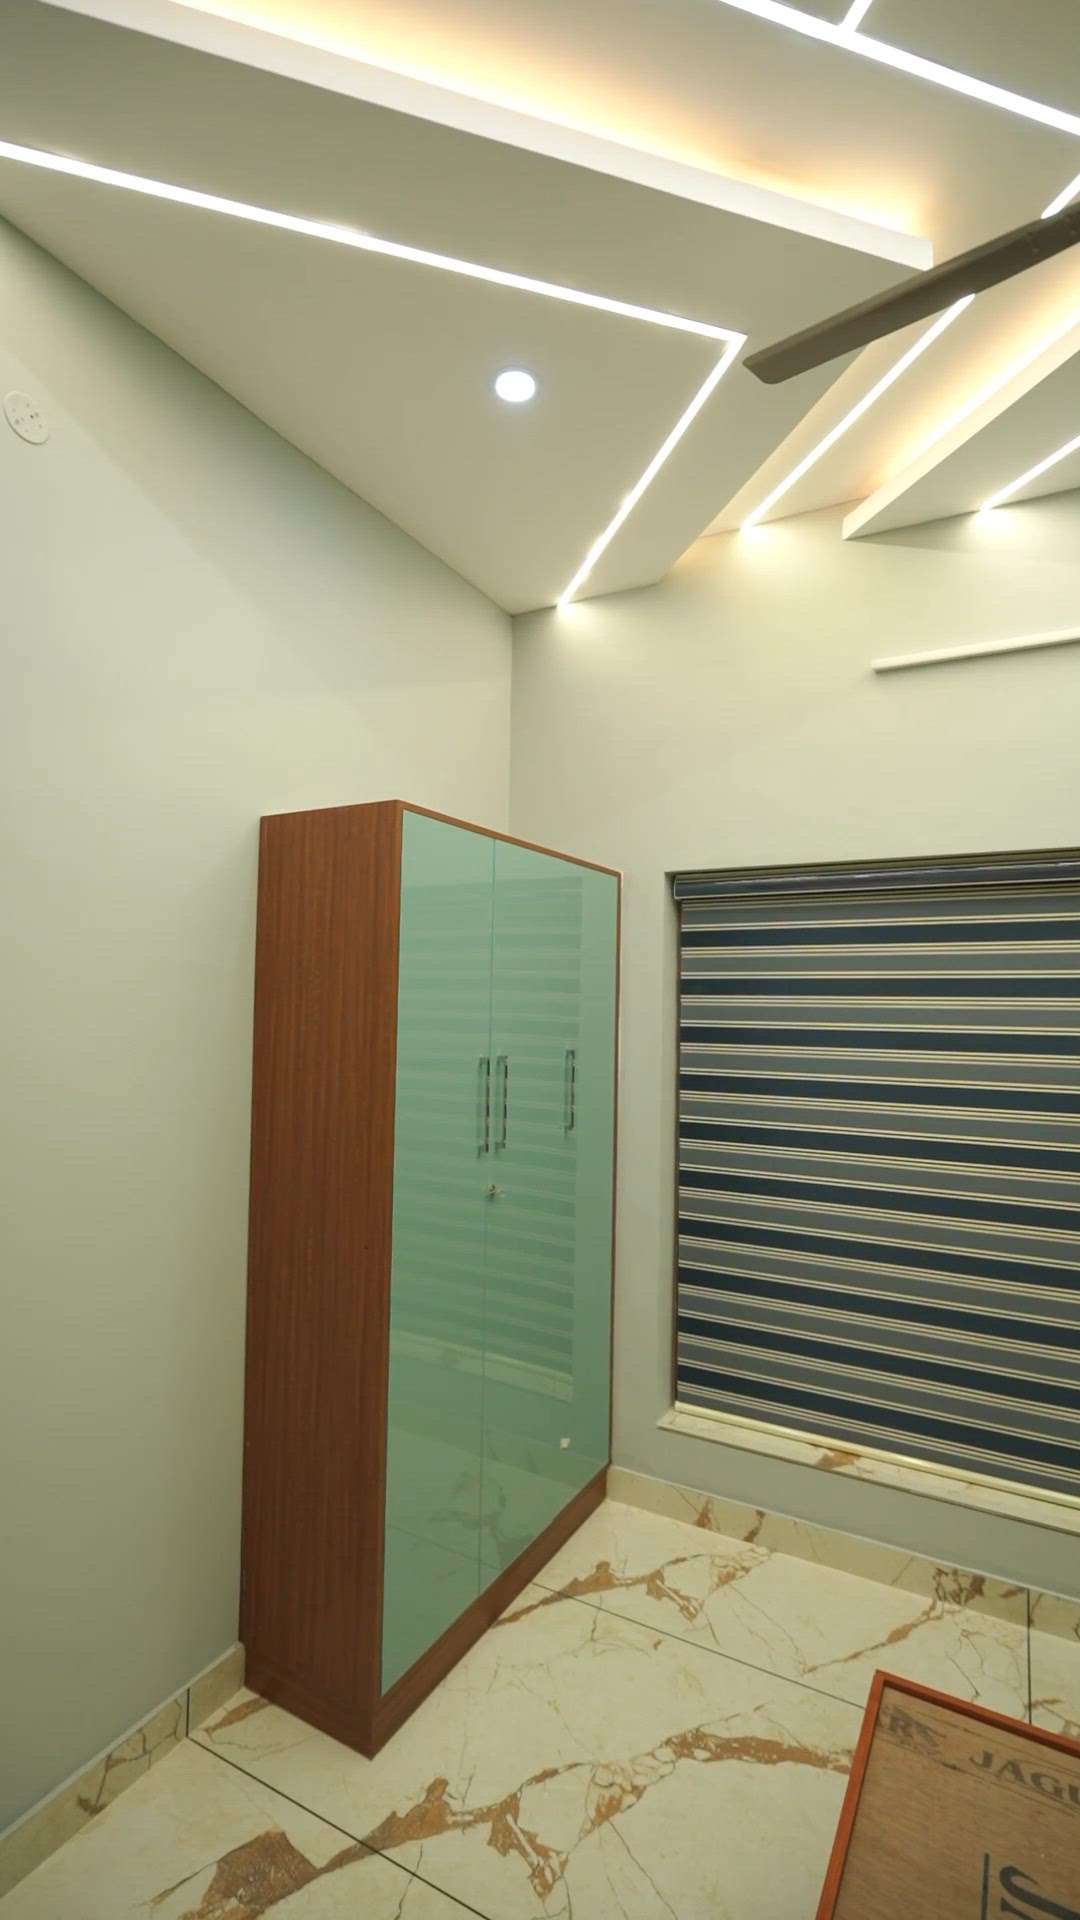 Completed. #BedroomDesigns #BedroomIdeas #Kollam #kerala #Thiruvananthapuram #Alappuzha #GypsumCeiling #gamingroom #Completed